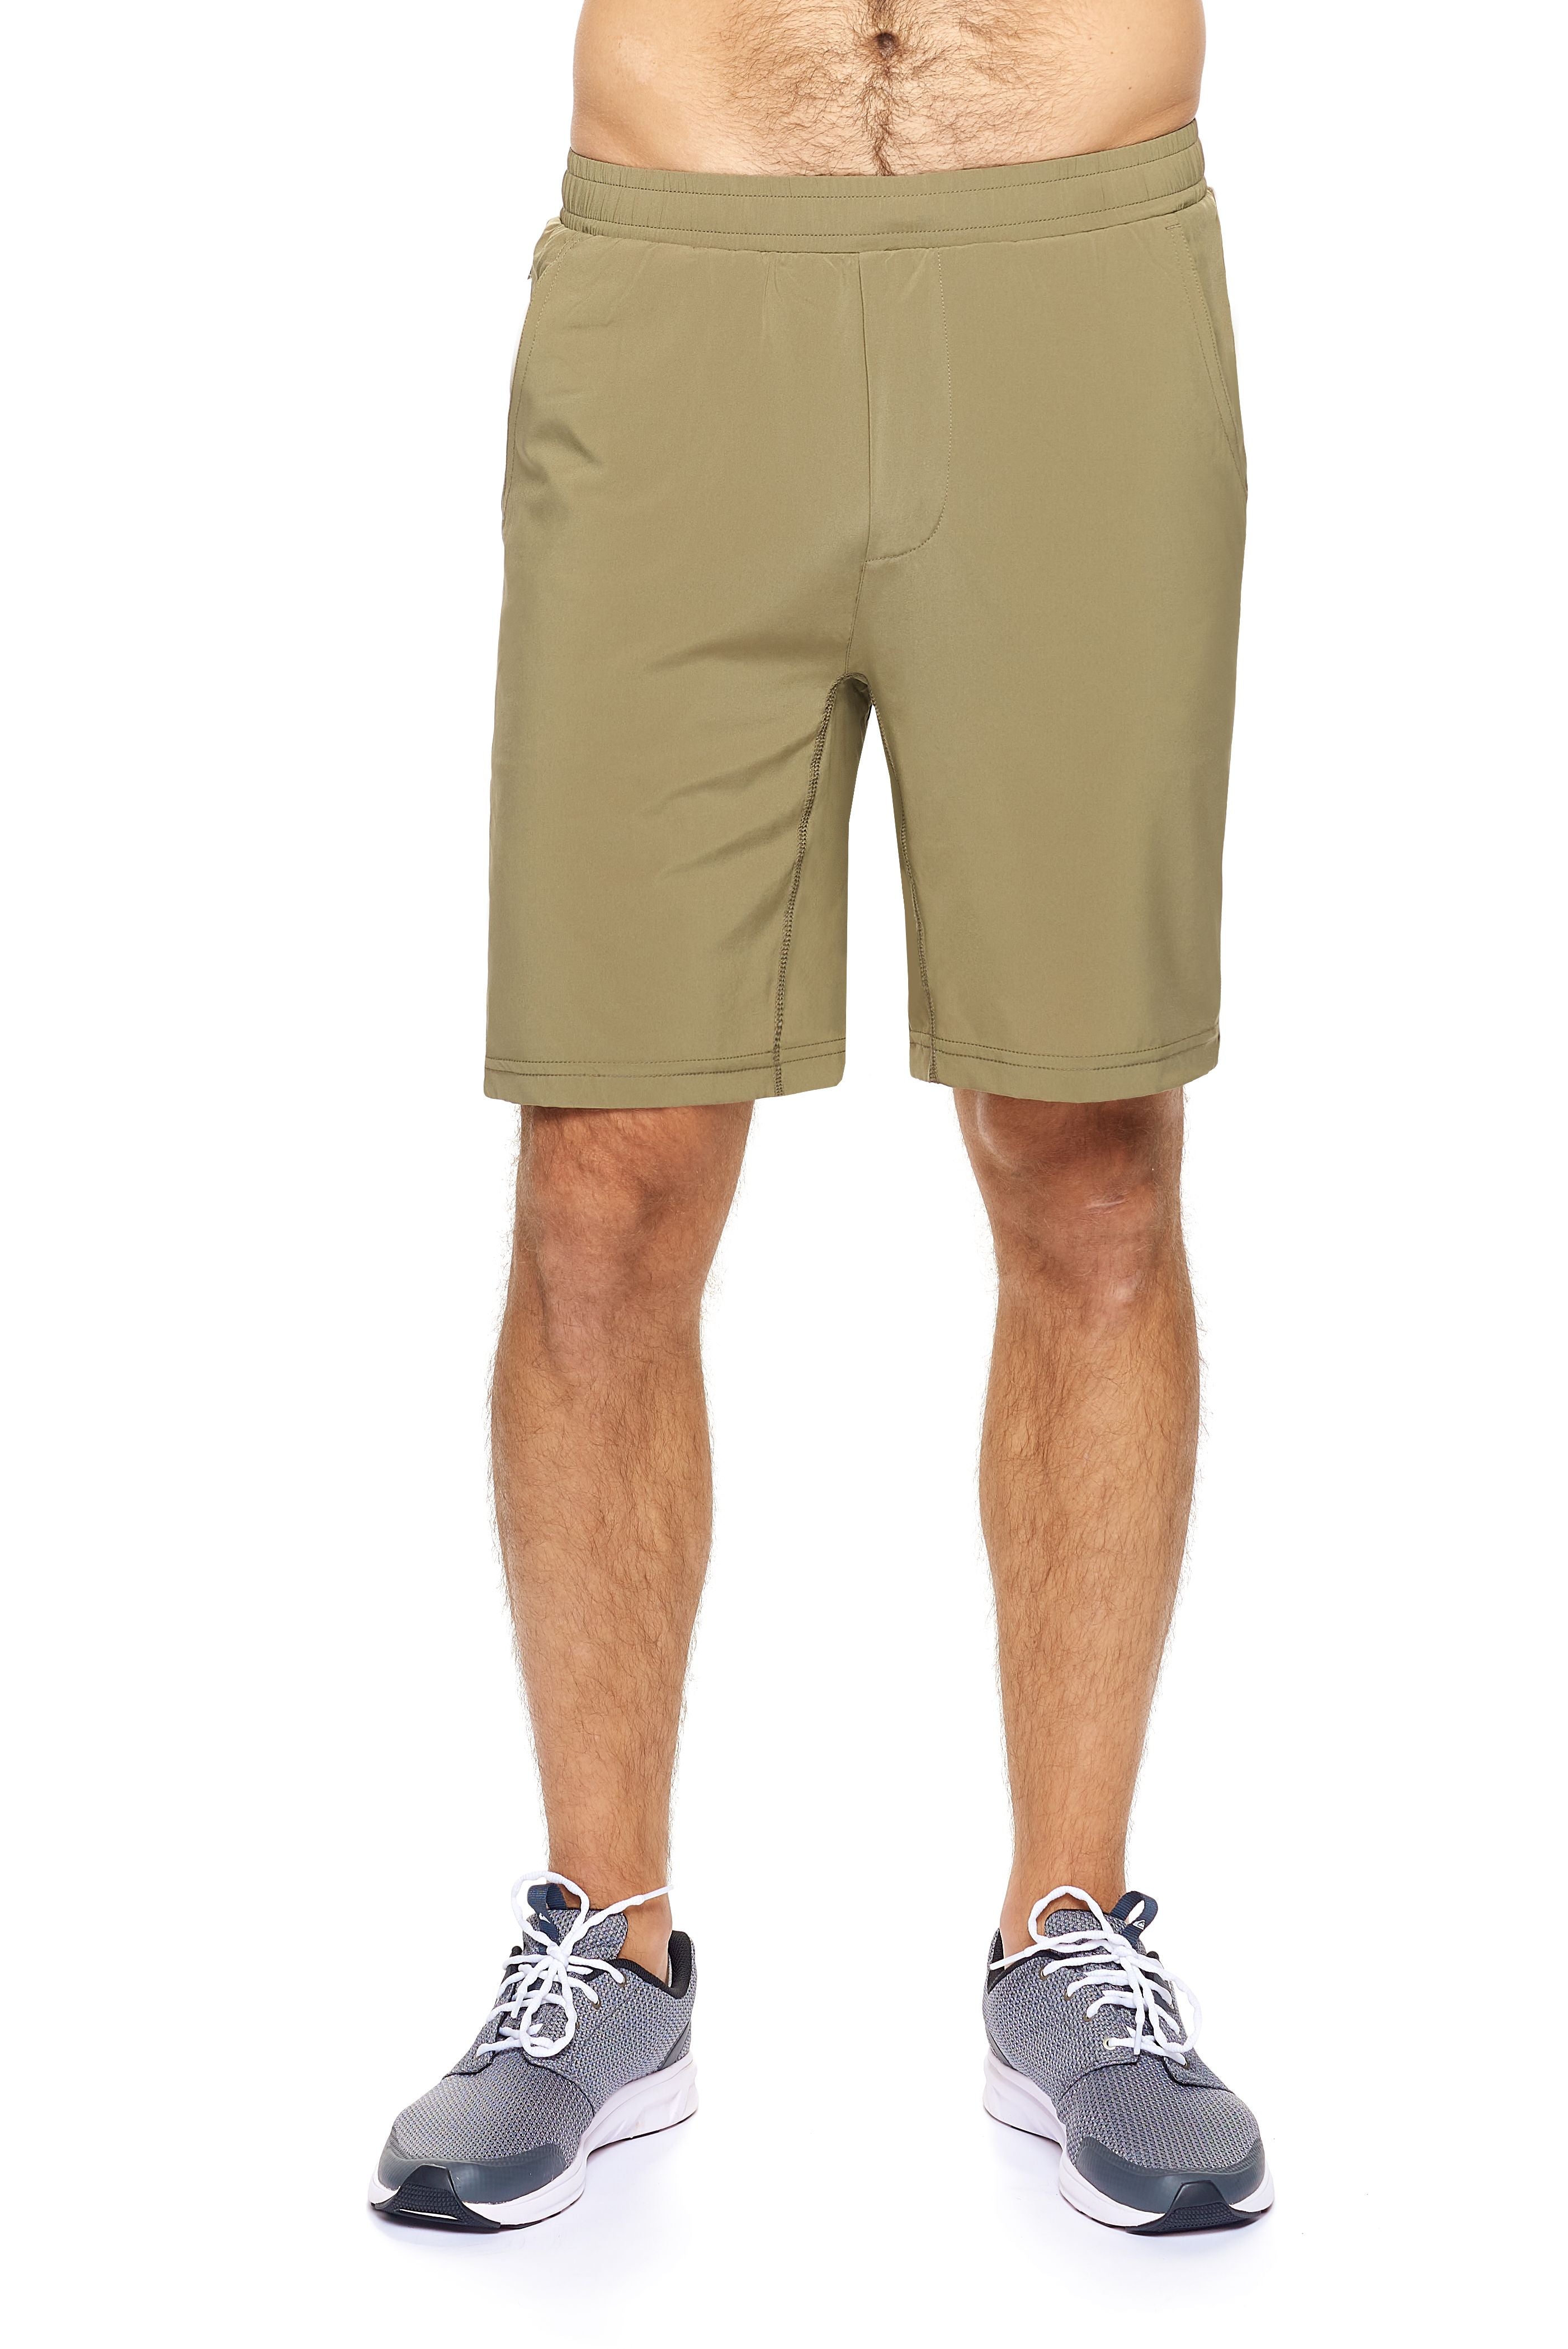 WL1108 Men's Paradise Shorts - Expert Brand#olive-green